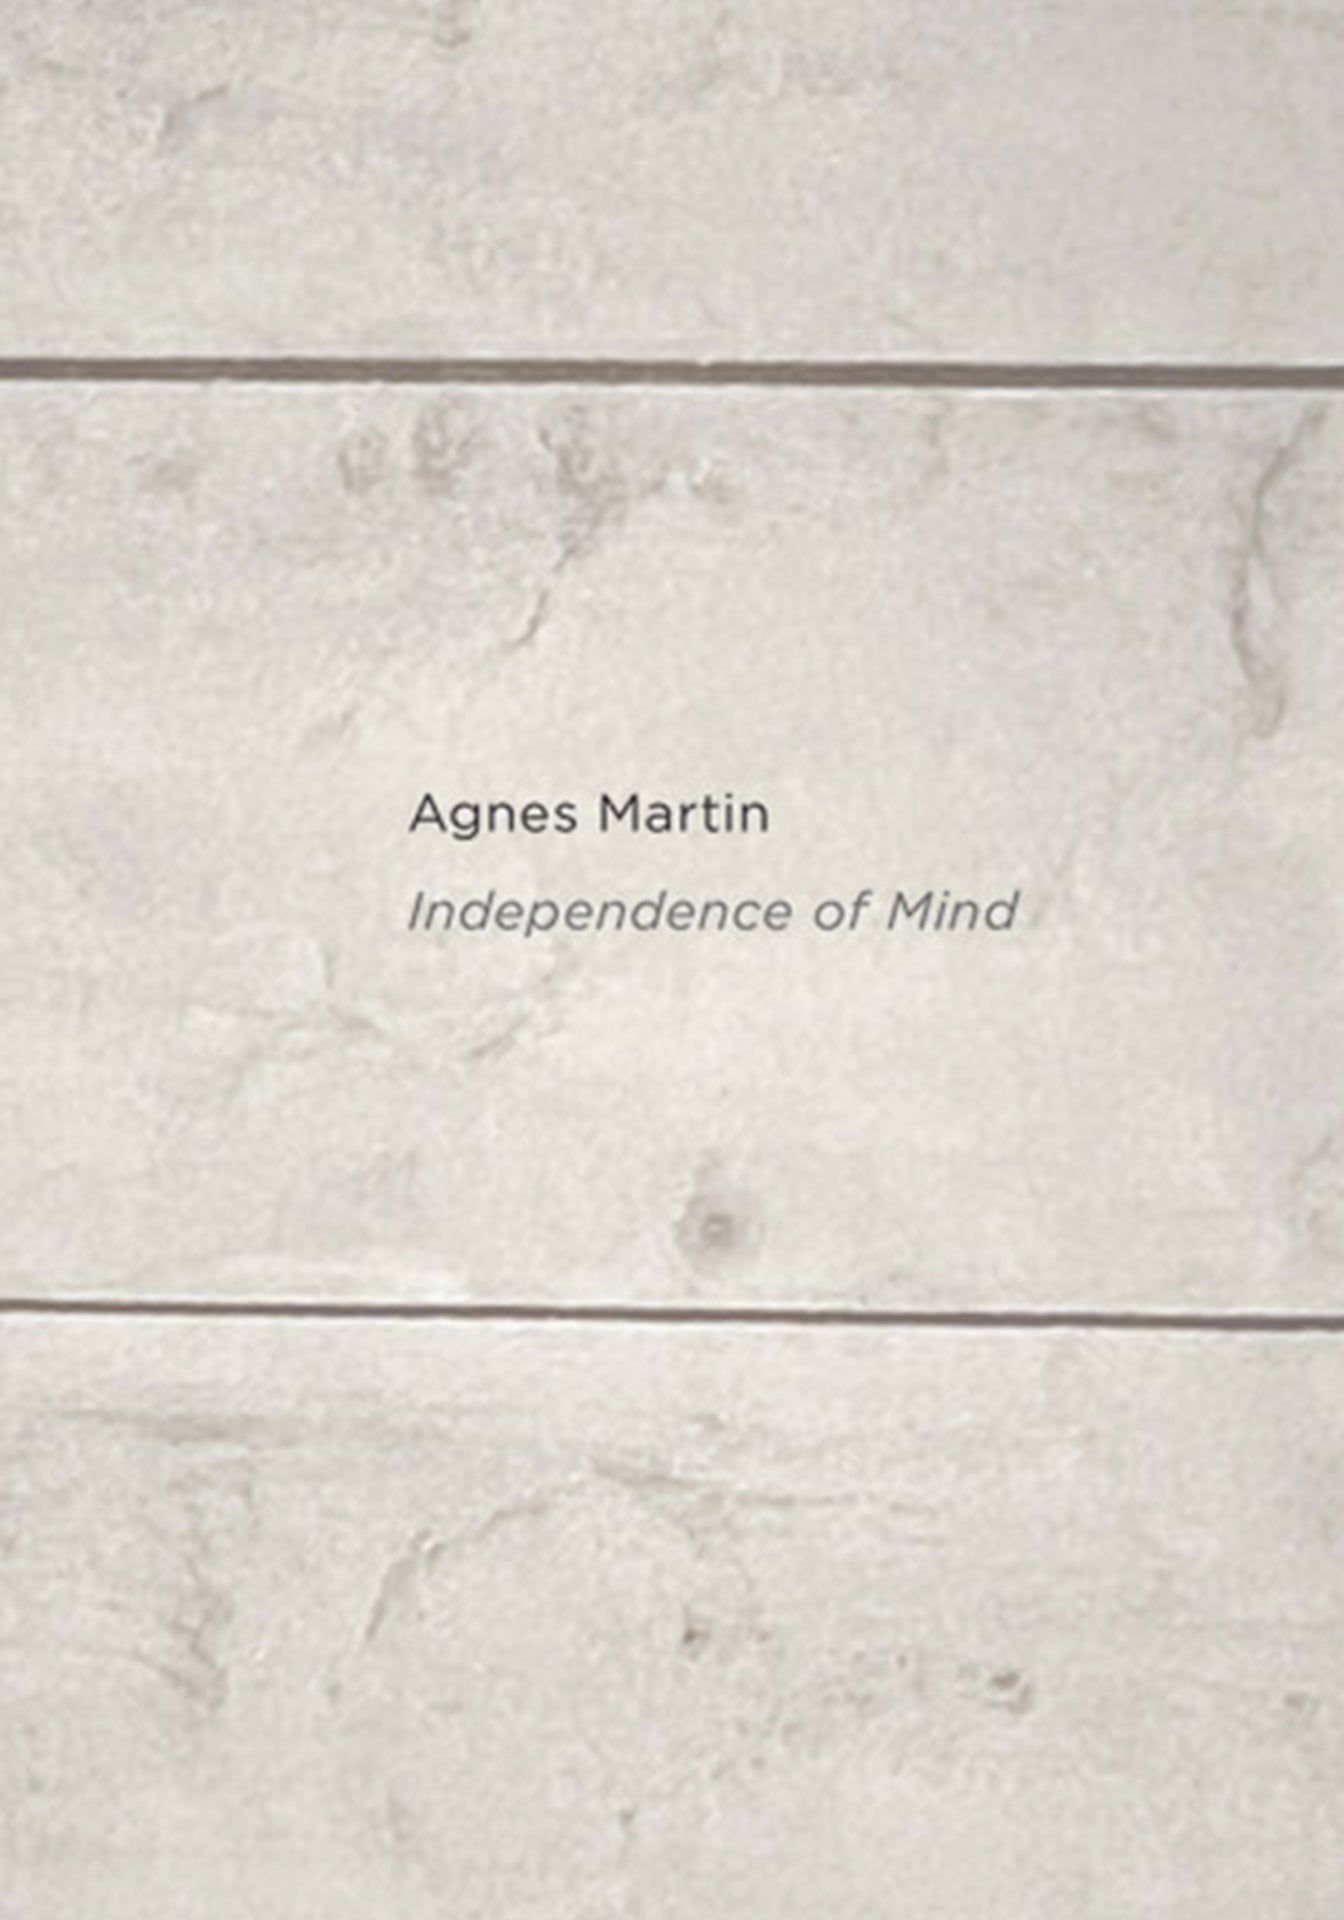 Agnes Martin: Independence of Mind